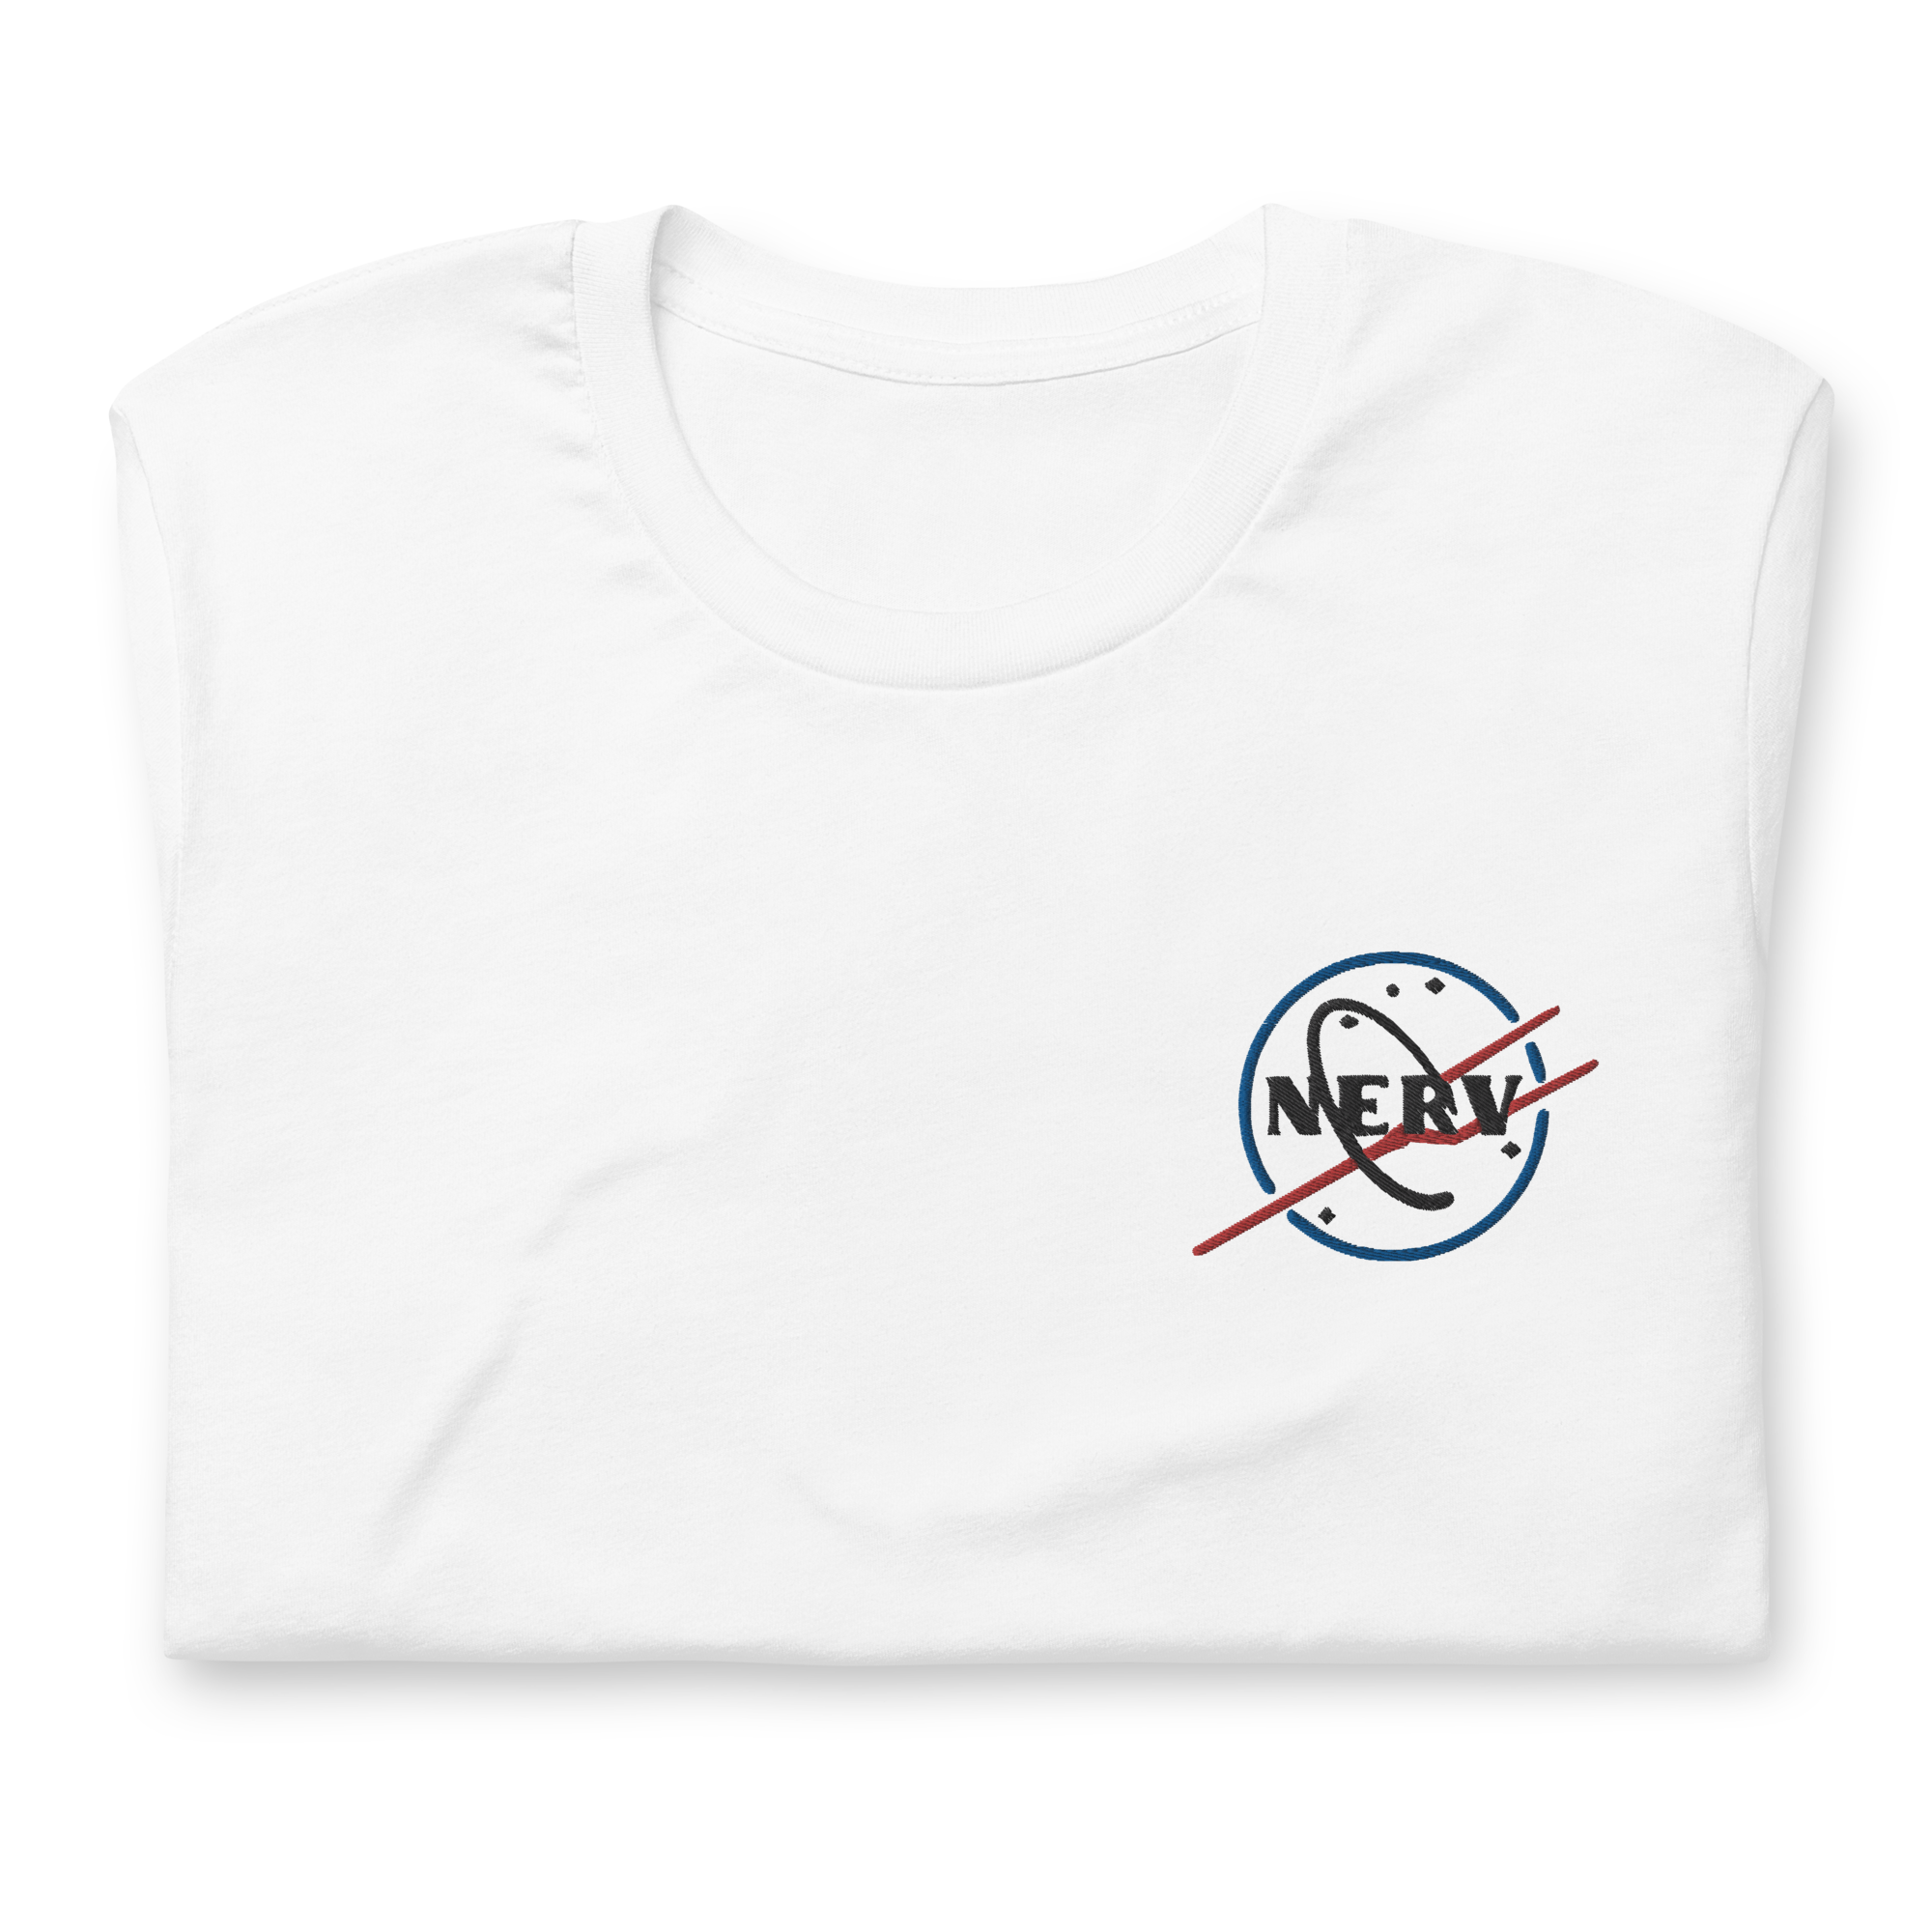 NERV Aerospace - Embroidery T-Shirt